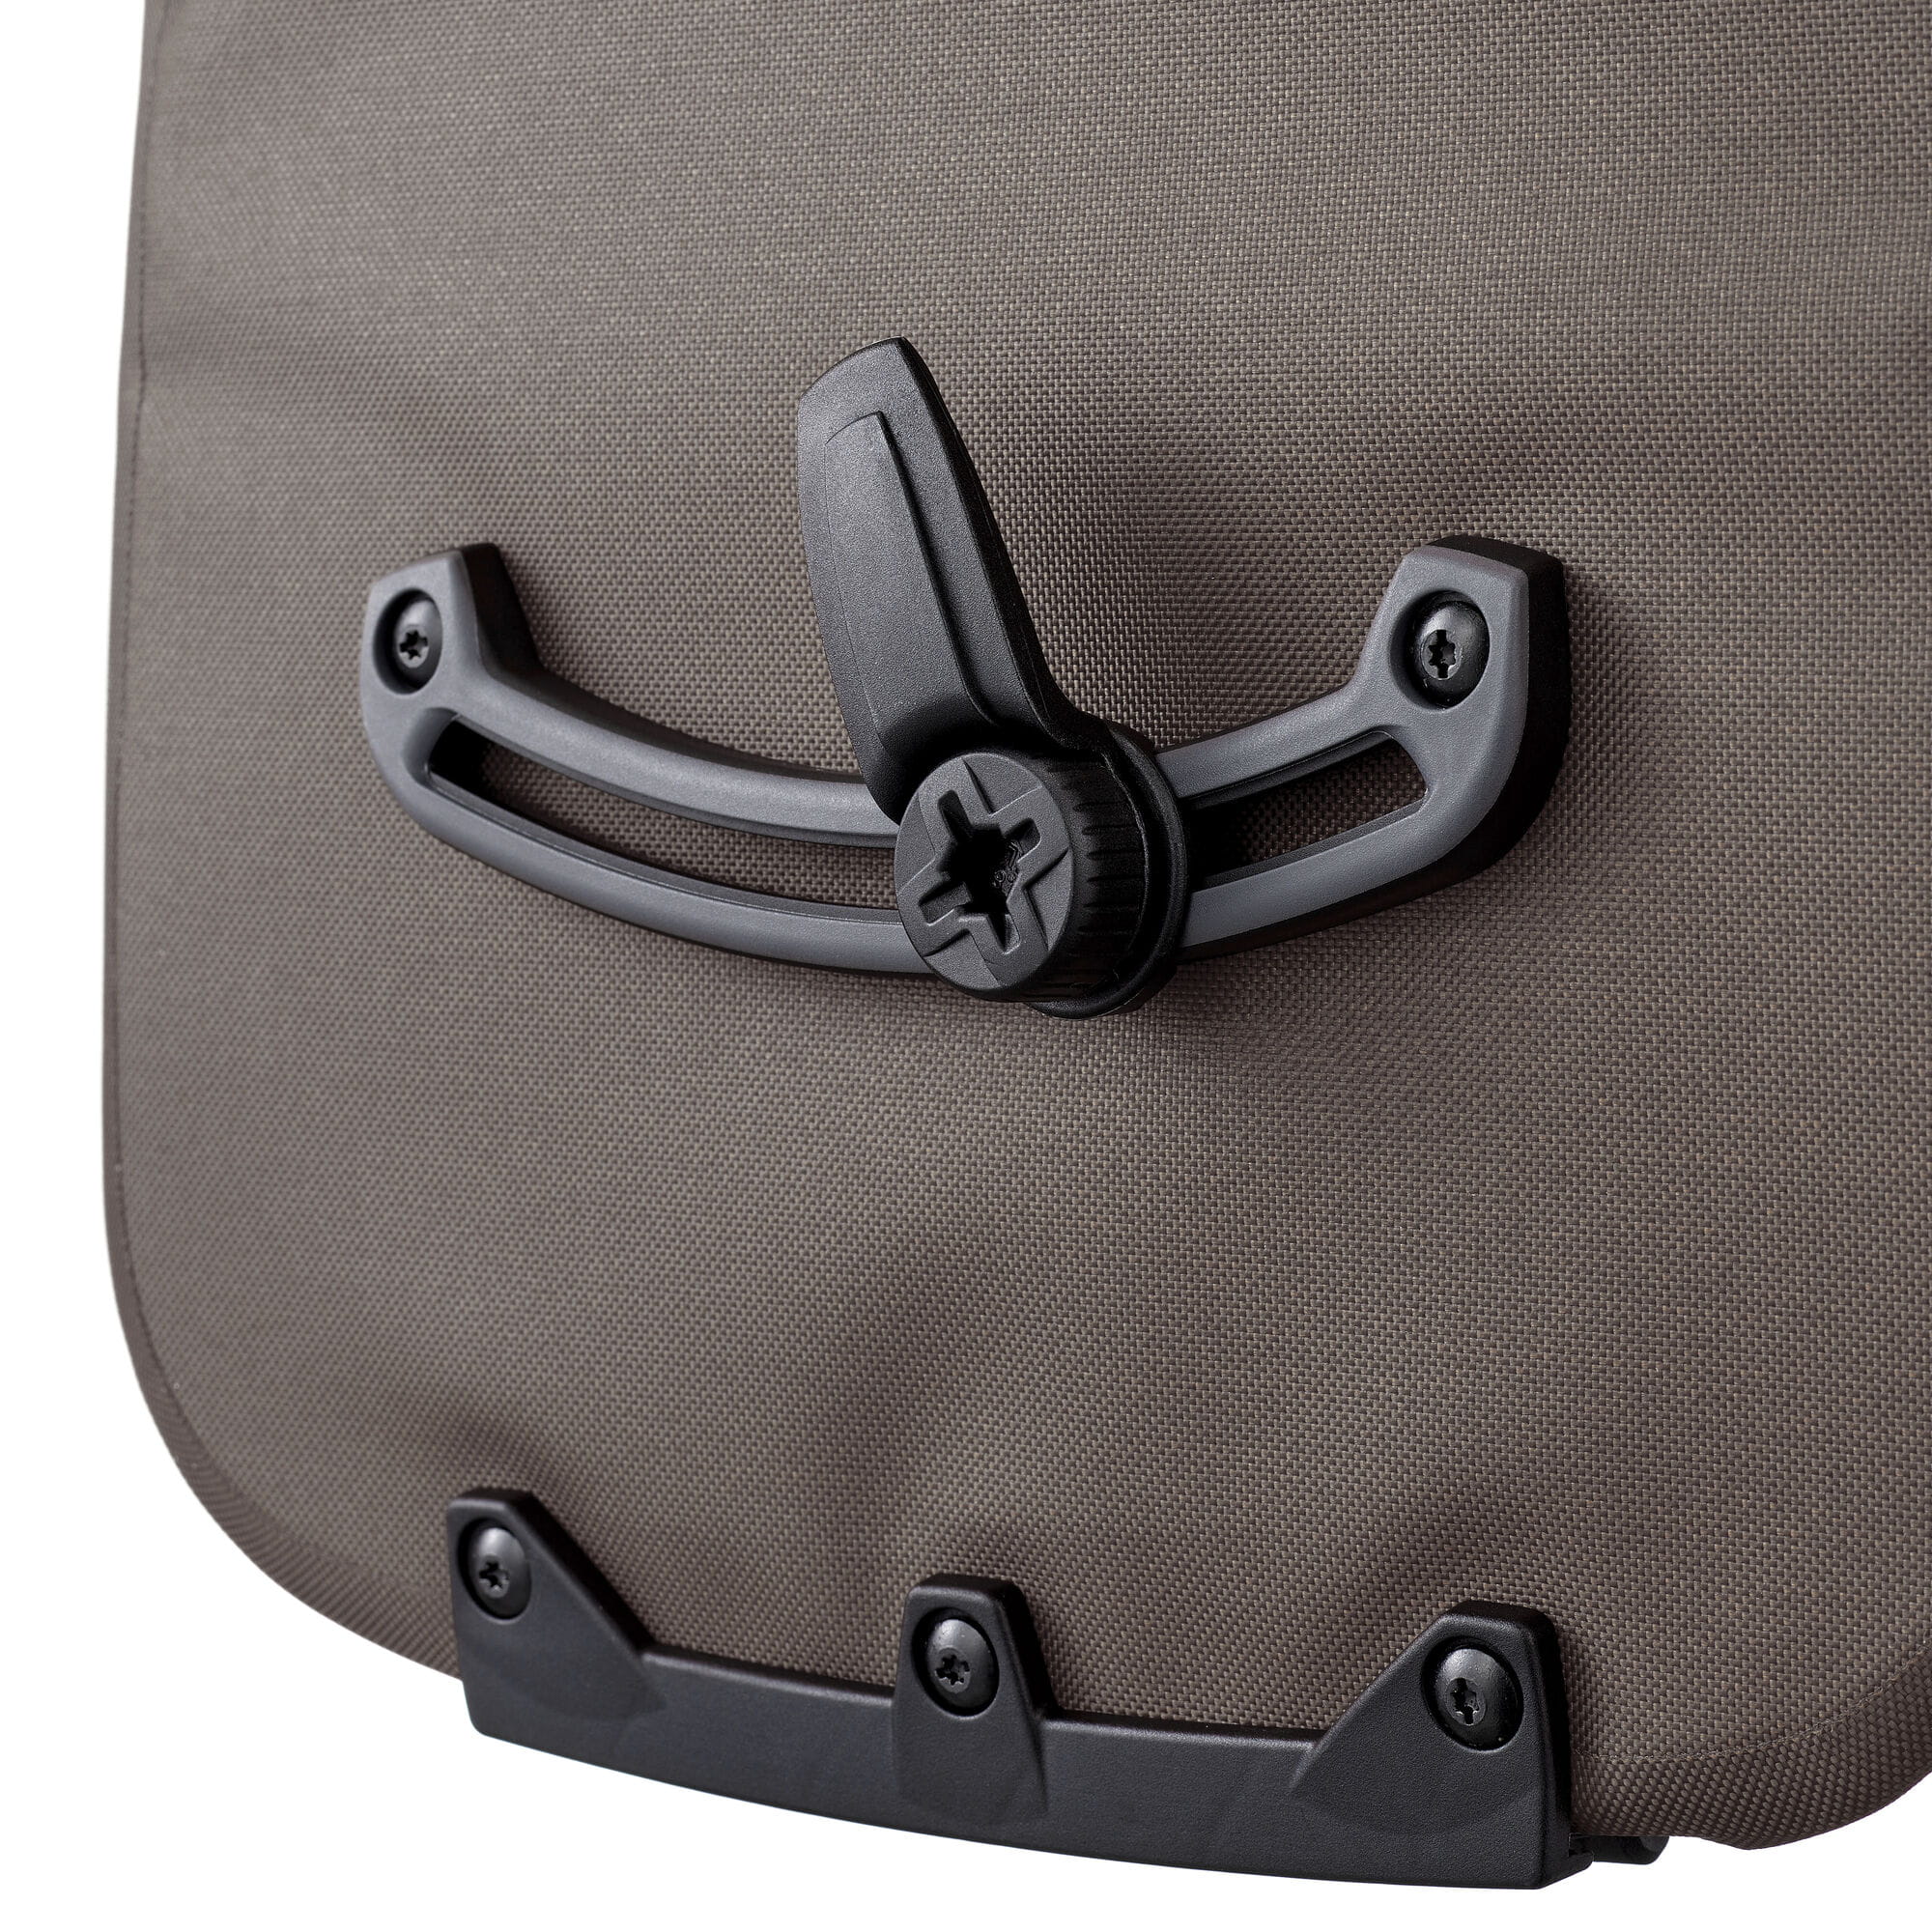 Ortlieb Vario PS QL2.1 Backpack and Rear Pannier Bag 26L